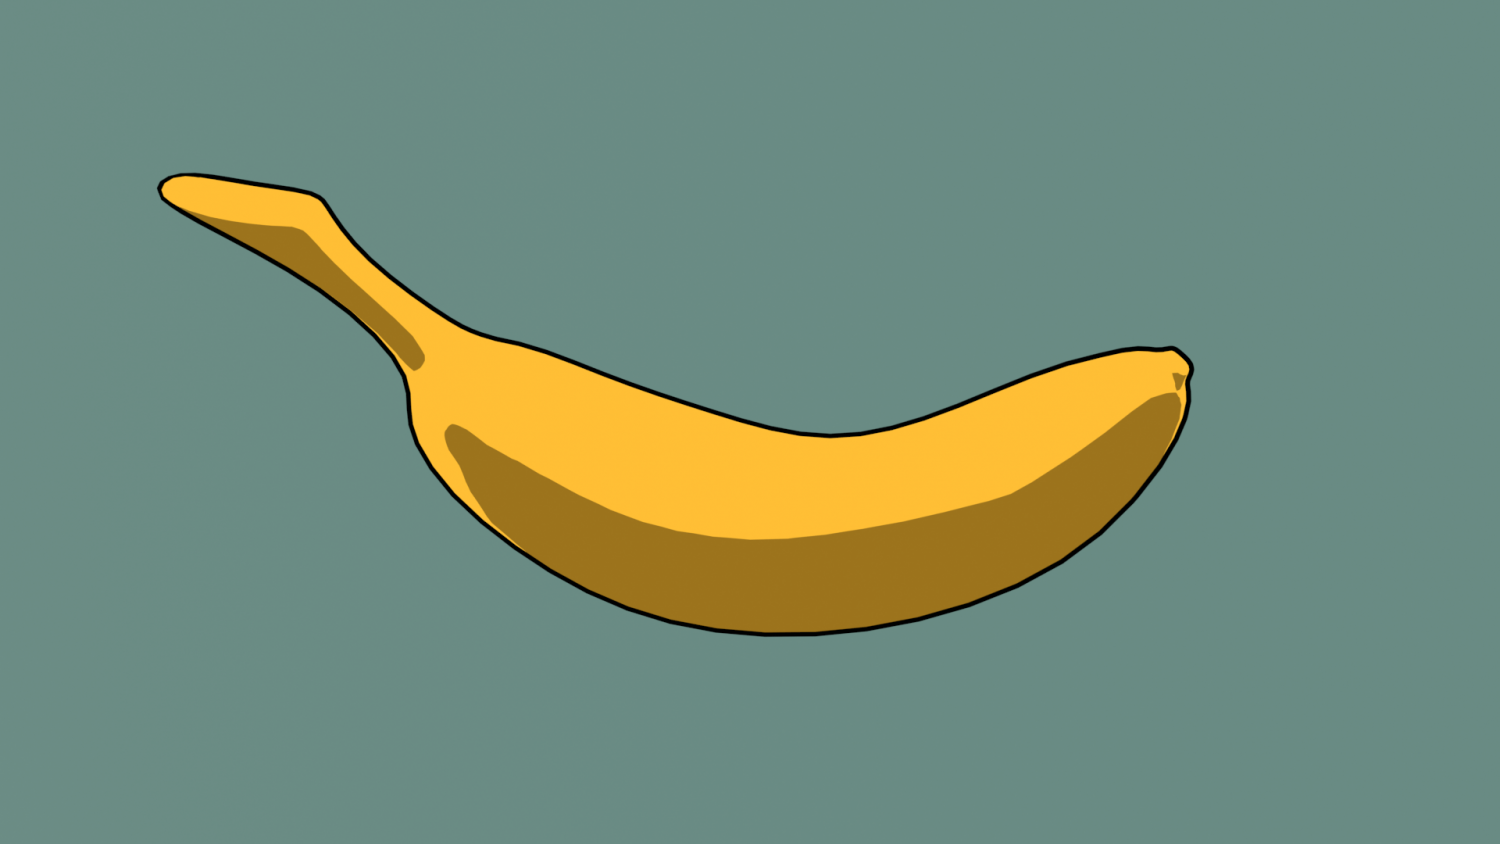 Anime Treasures: Hidden Book Gems in the Anime Banana Fish